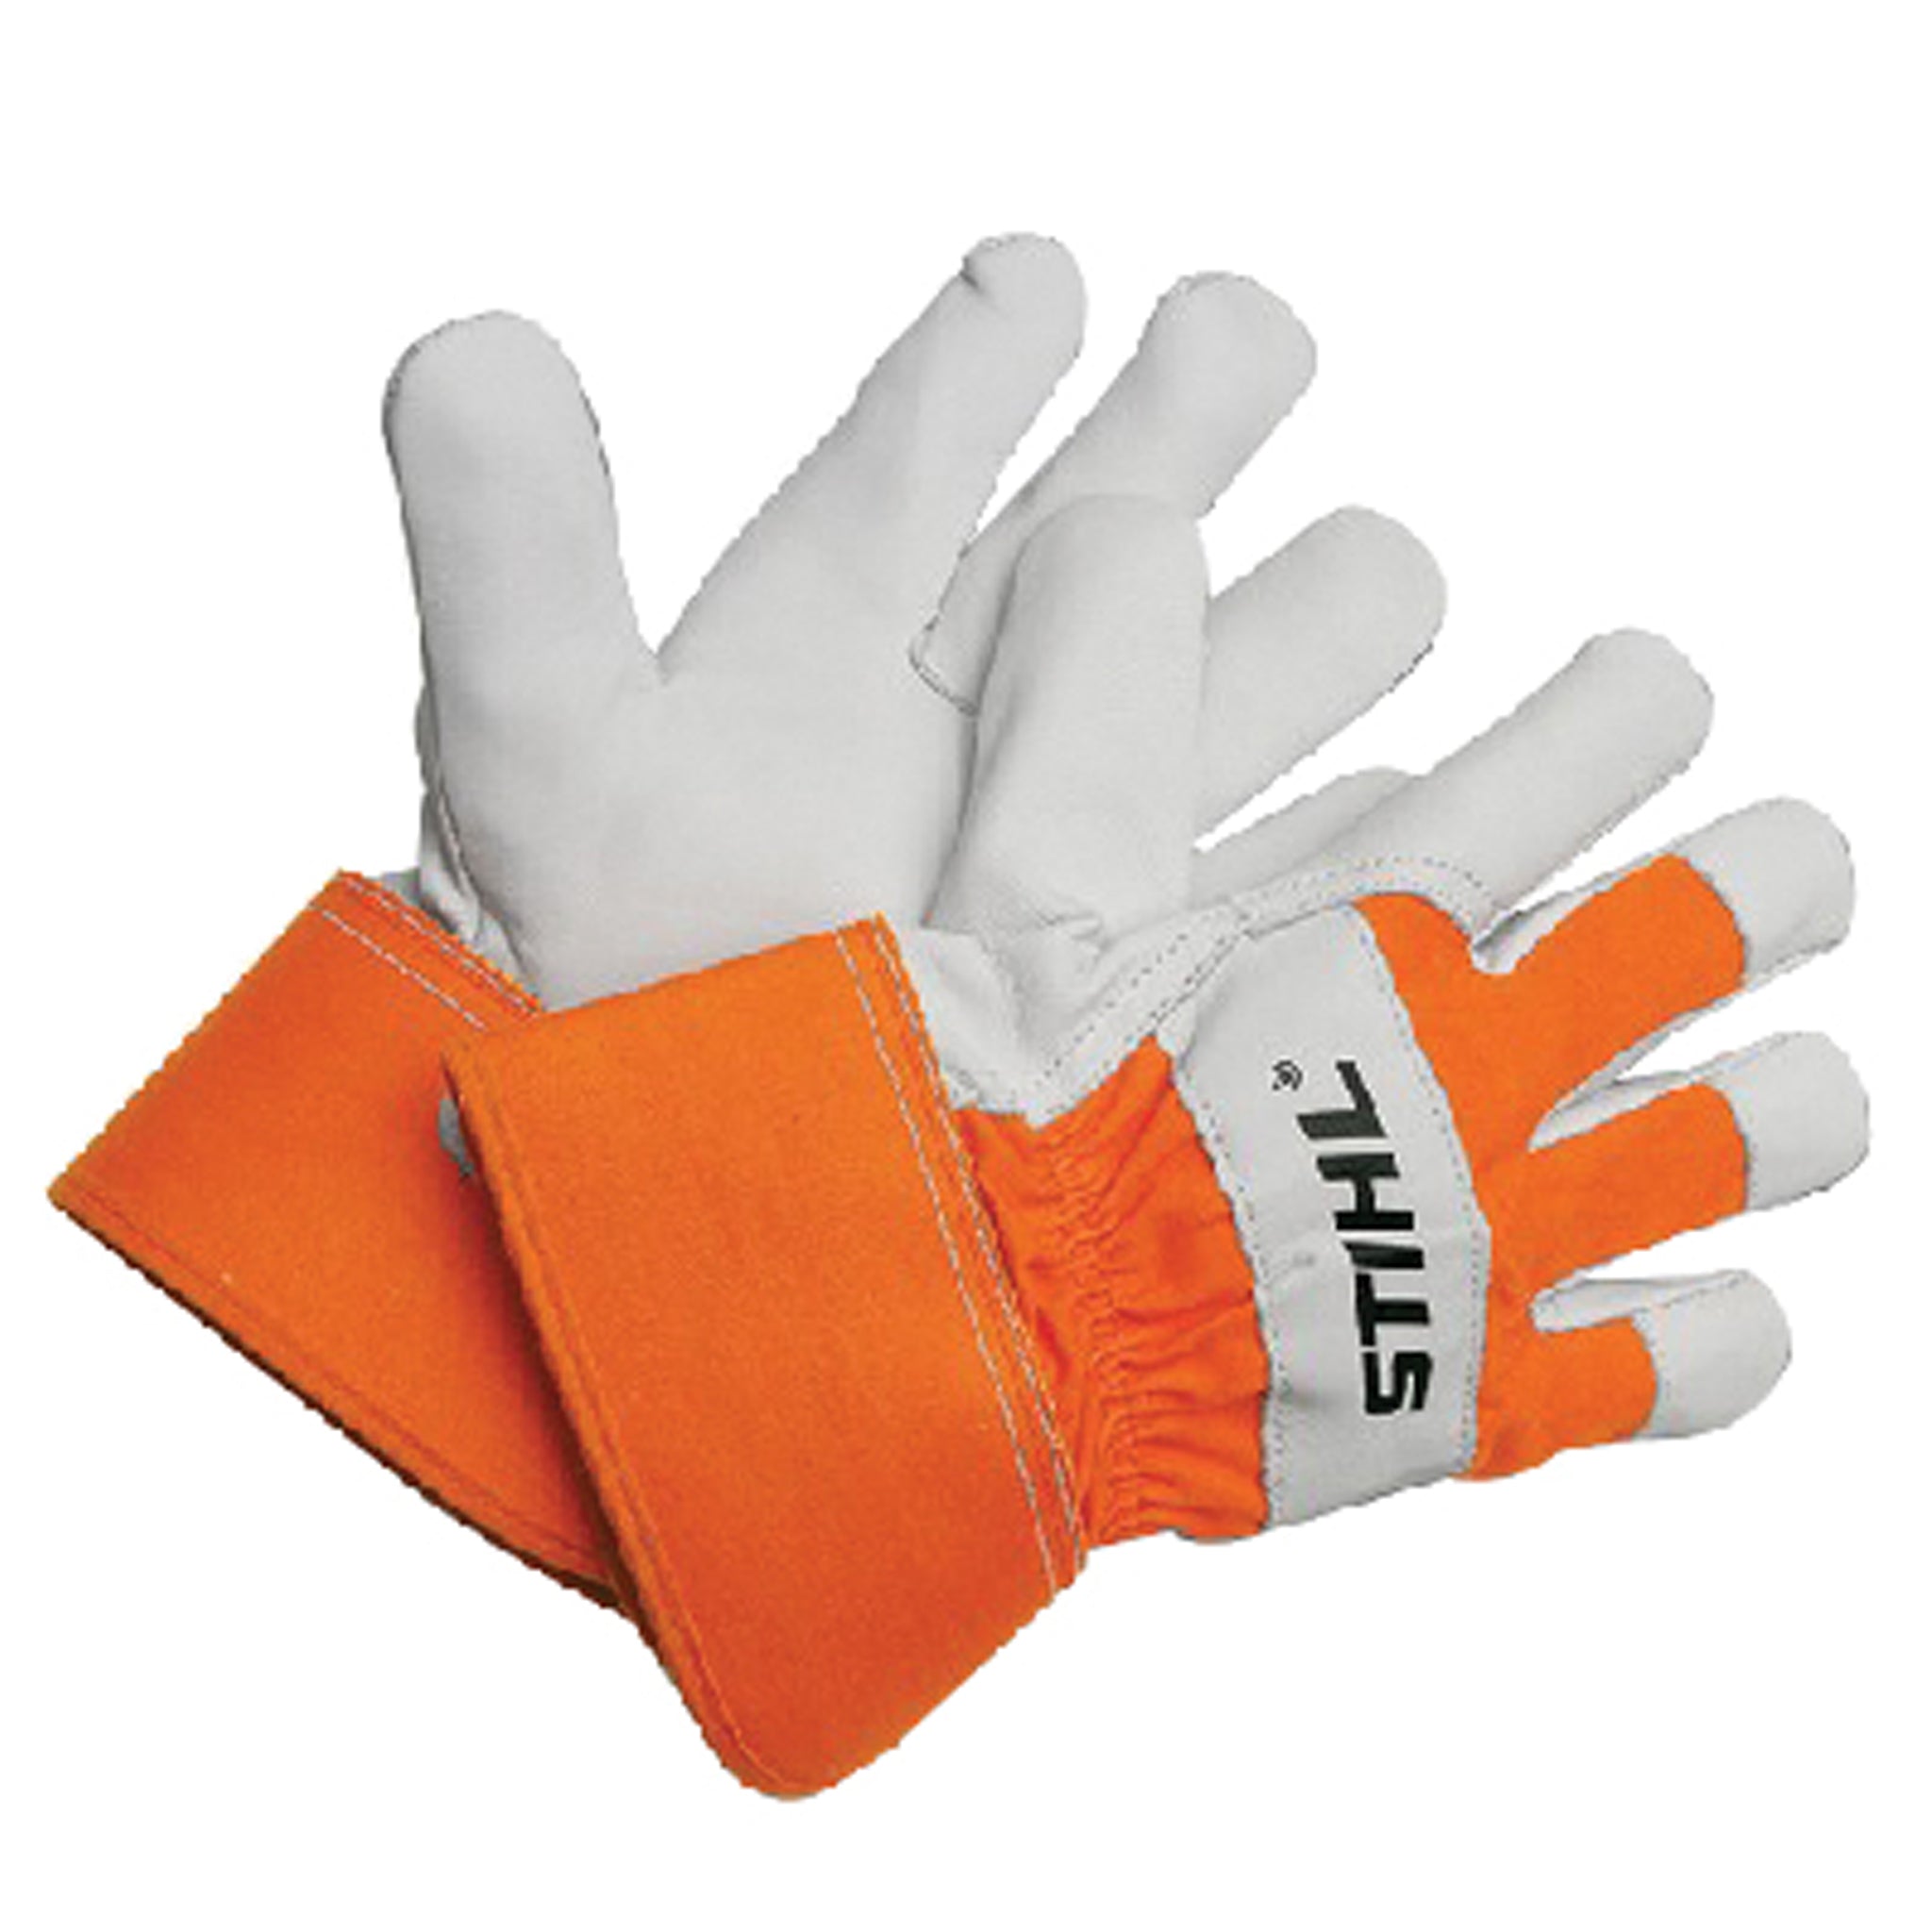 Stihl Heavy Duty Work Gloves